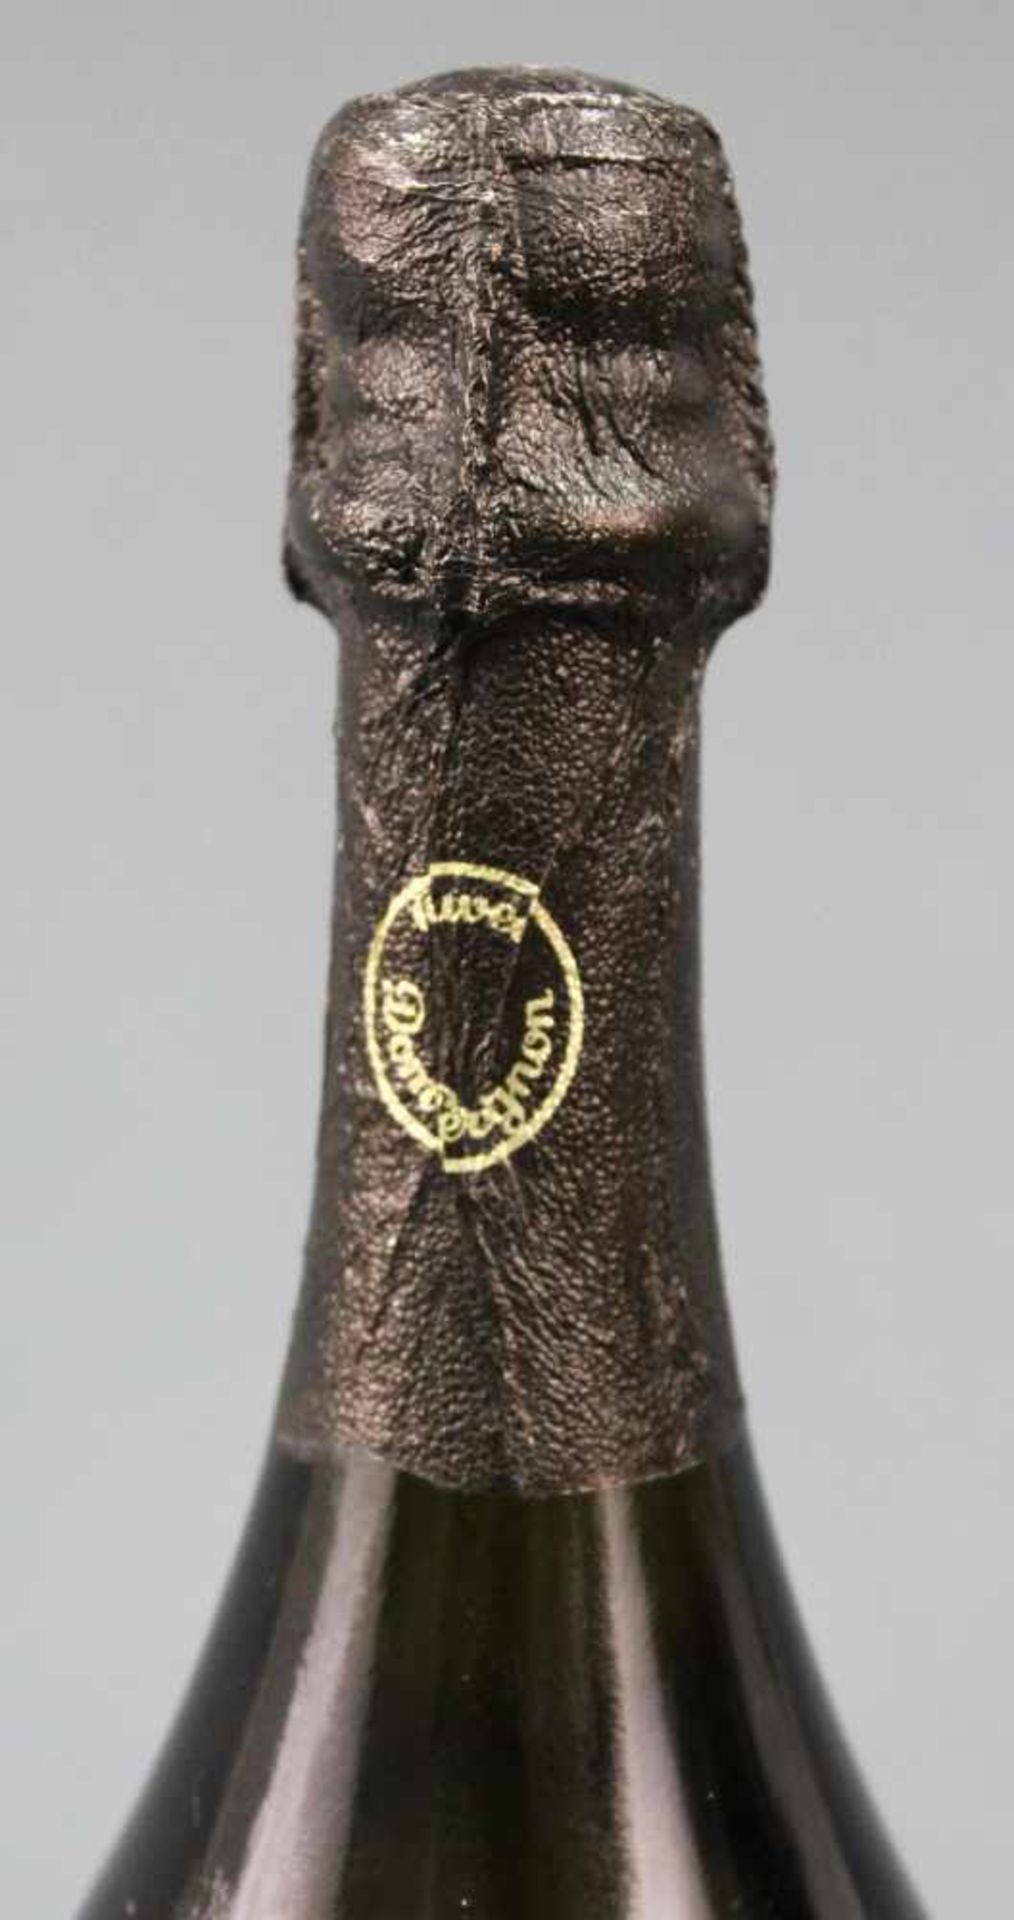 1990 Champagne. Cuvee Dom Perignon. Vintage.Moet et Chandon a Epernay. Fondee en 1743. Eine ganze - Bild 5 aus 8